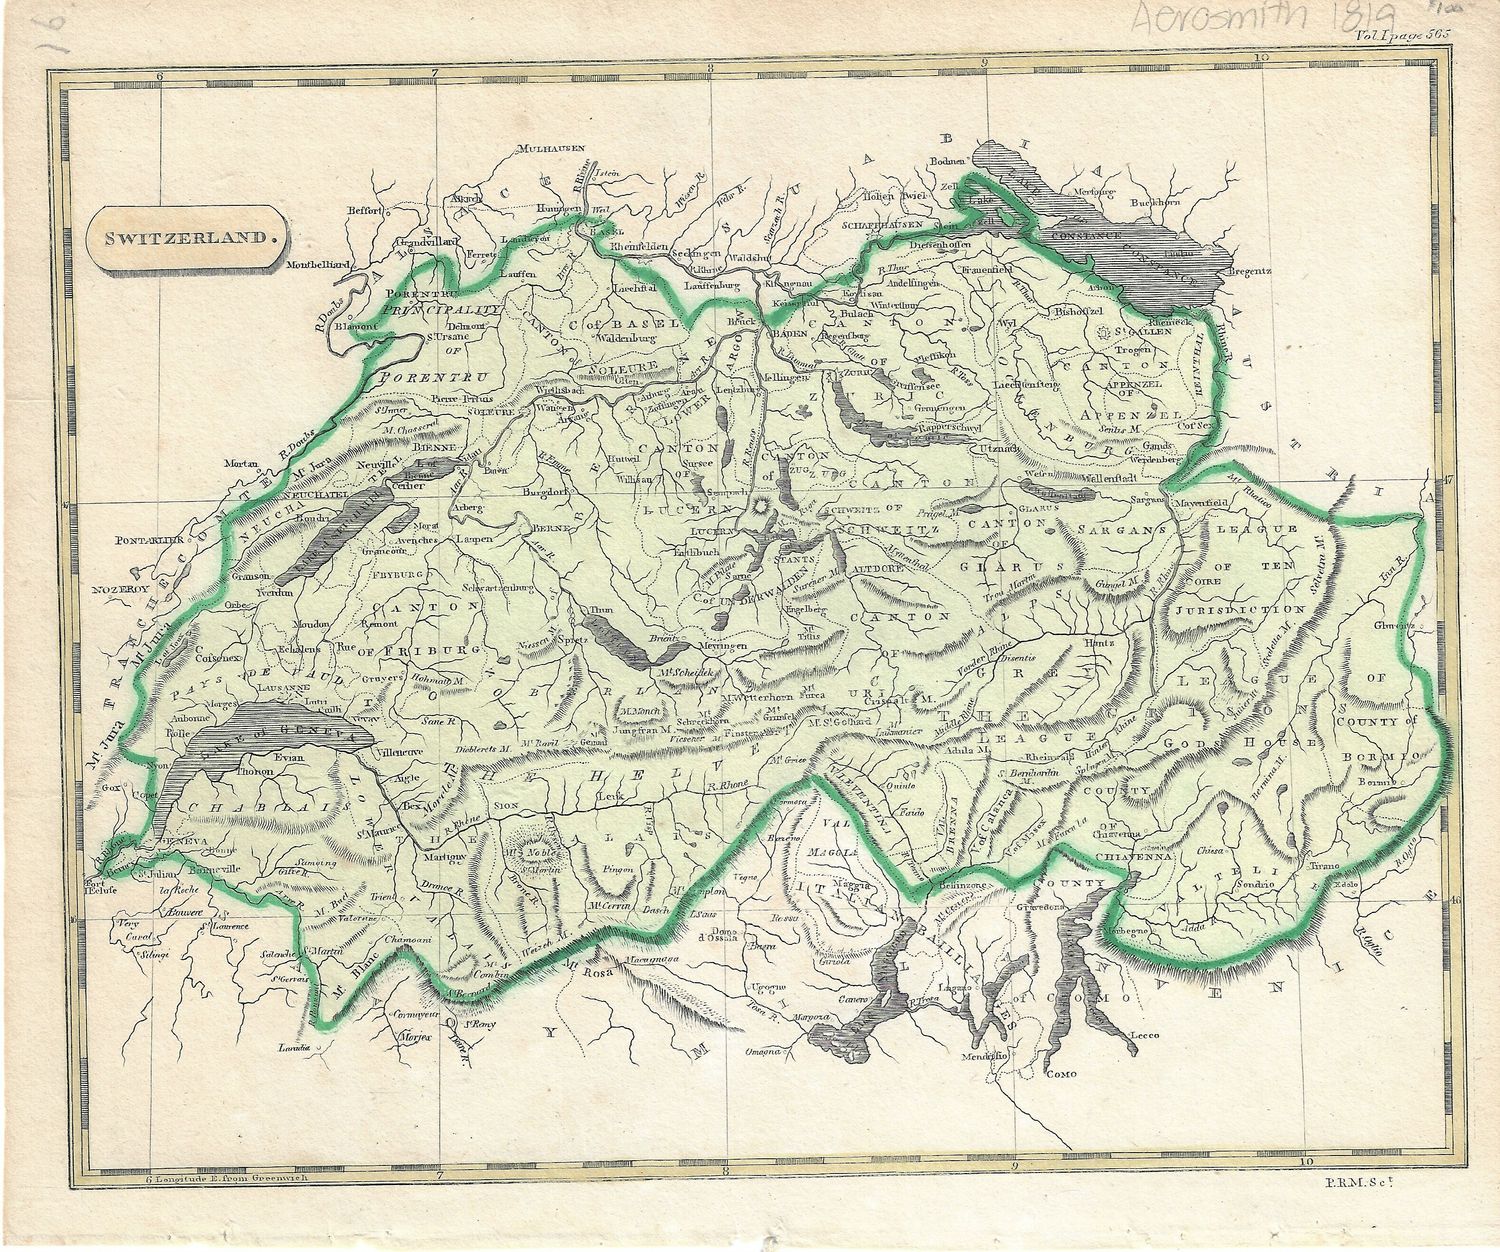 1819 Map of Switzerland by Aerosmith